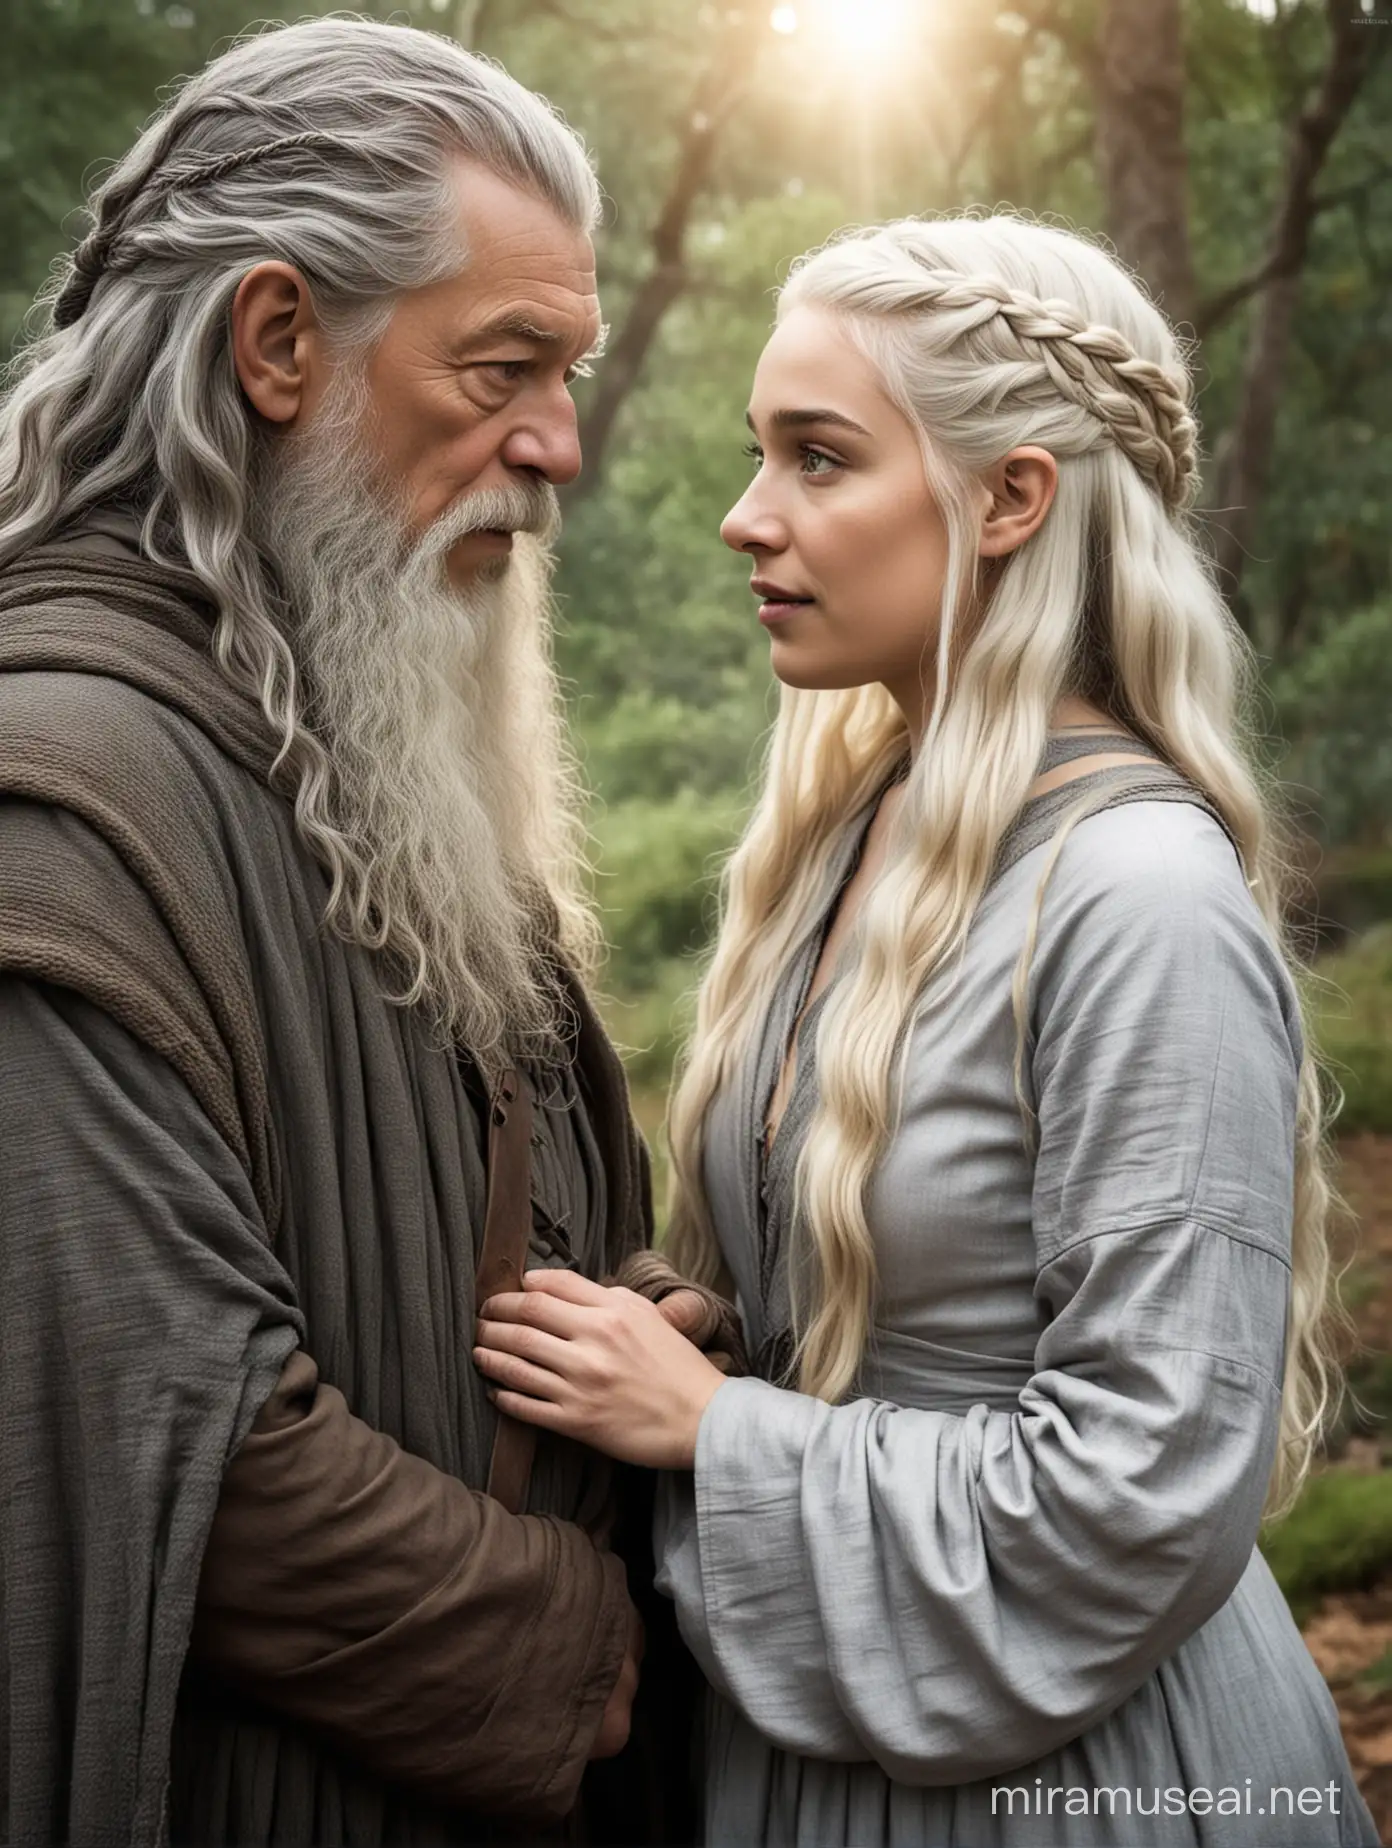 Daenerys Targaryen and Gandalf the Grey Encounter in a Mythical Realm